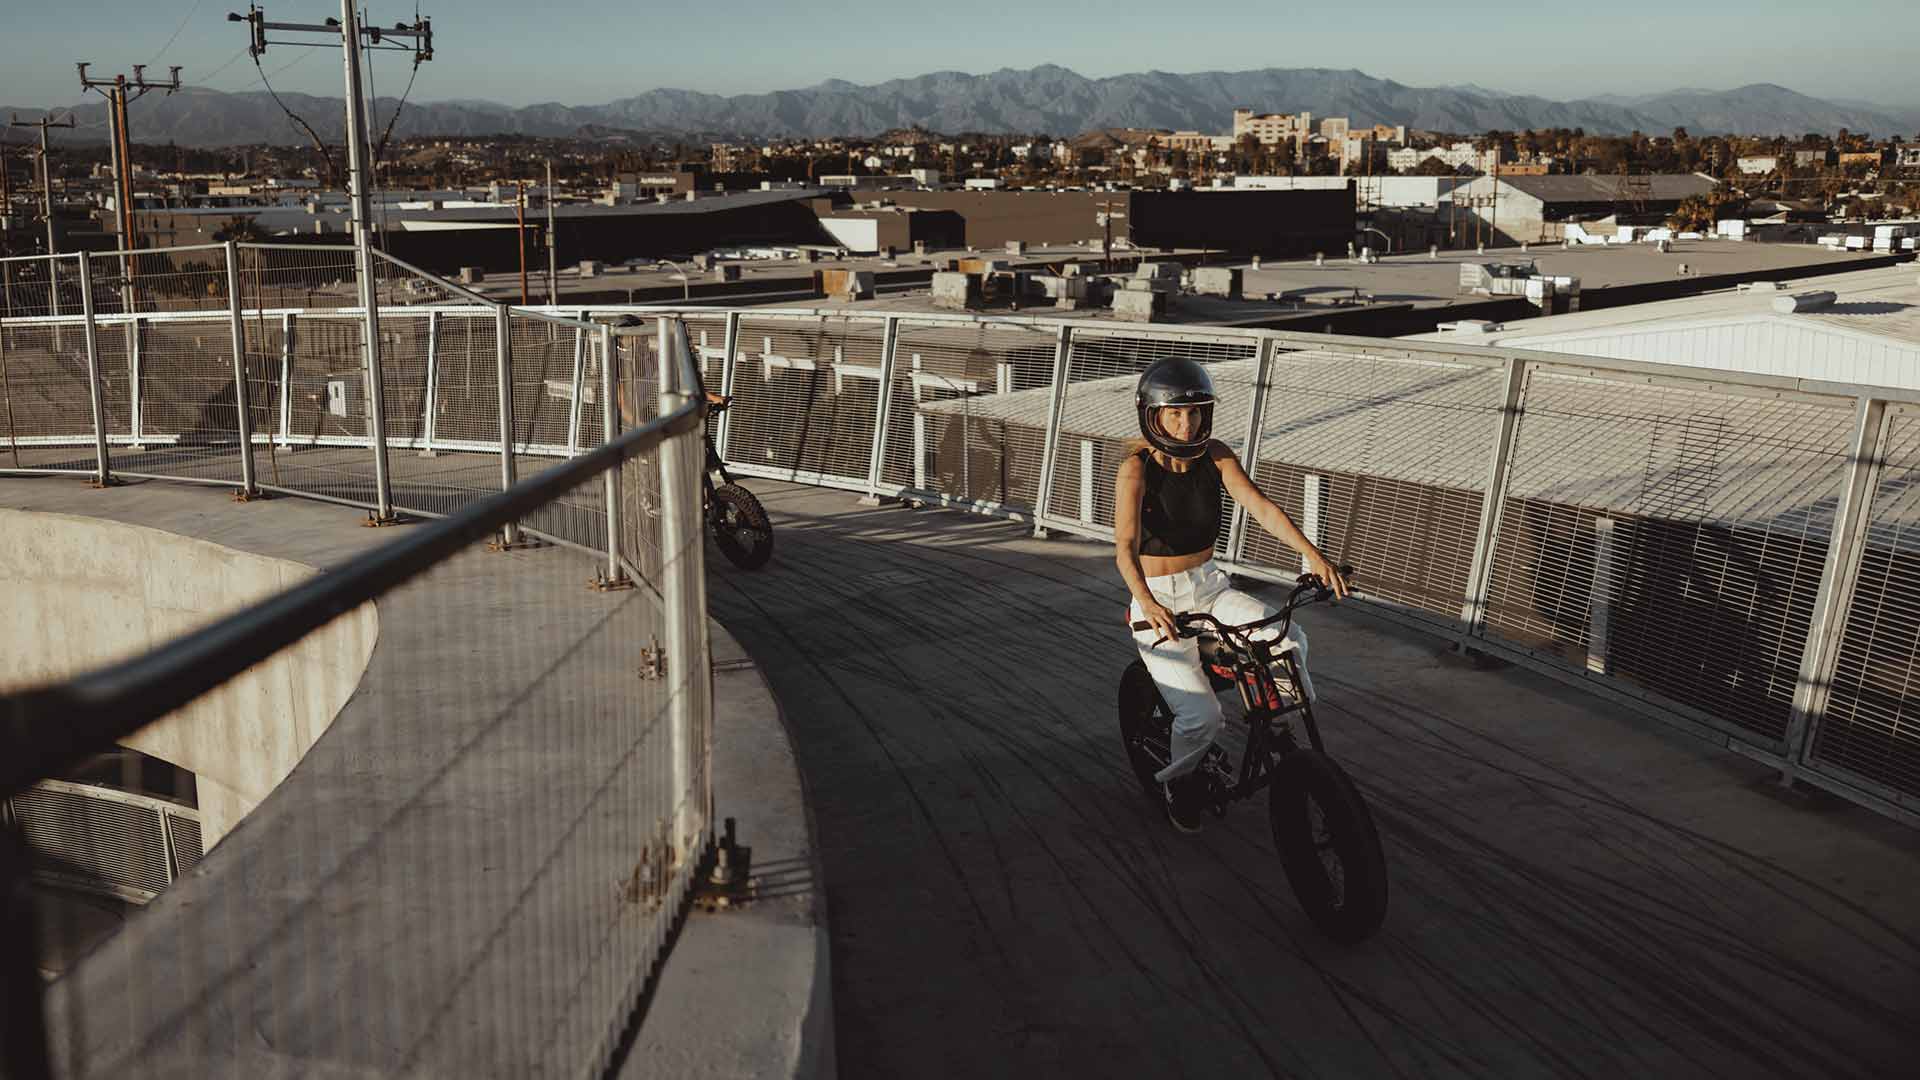 Rider ascending a bridge ramp in a city environment